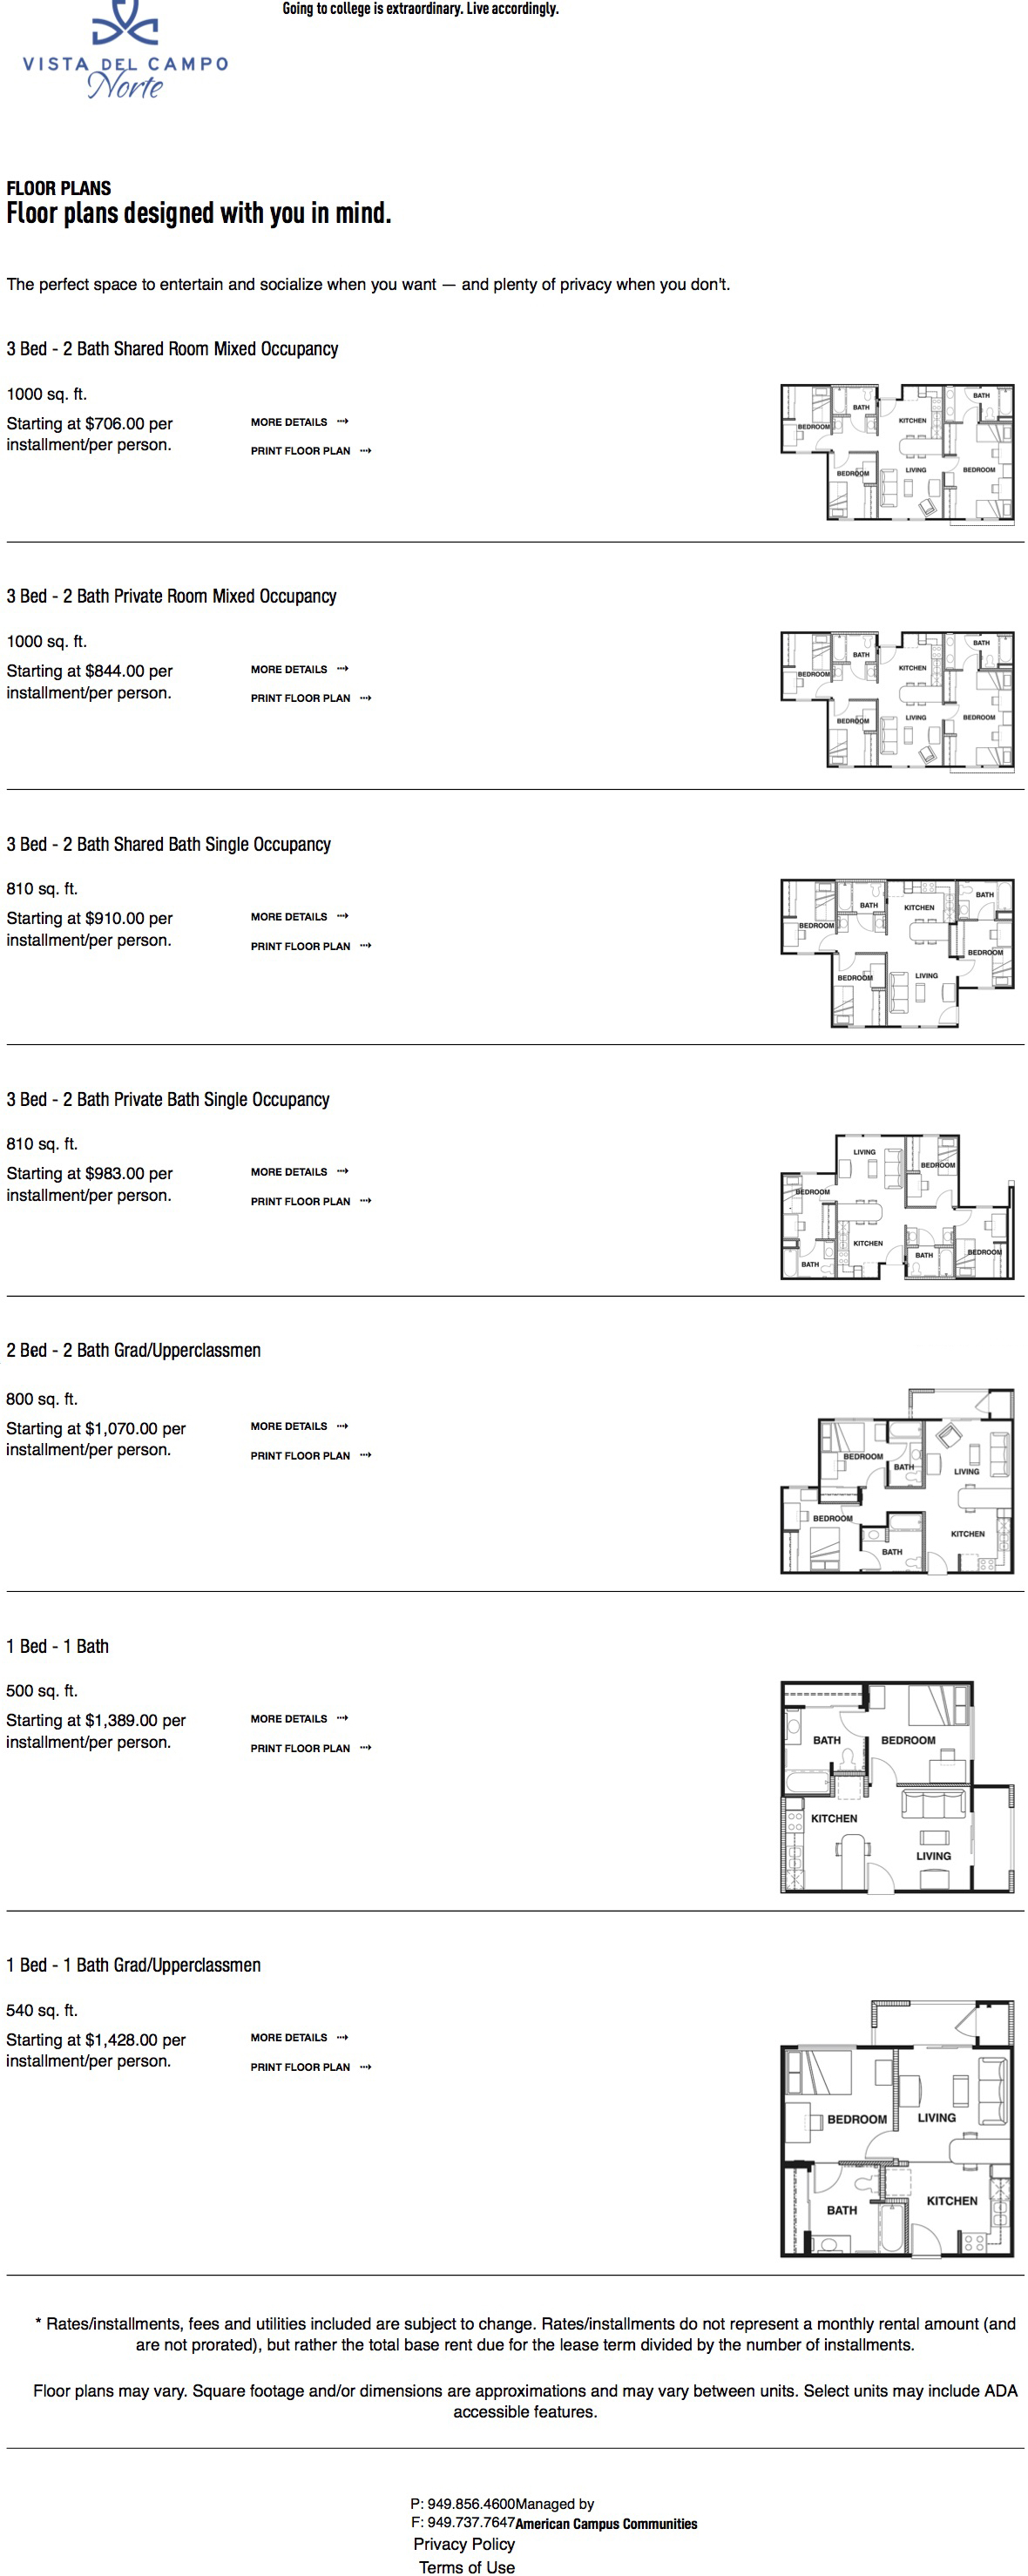 http://www.davisvanguard.org/wp-content/uploads/2017/05/Floor-Plans-Vista-del-Campo-Norte-Student-Housing-Irvine-CA.jpg